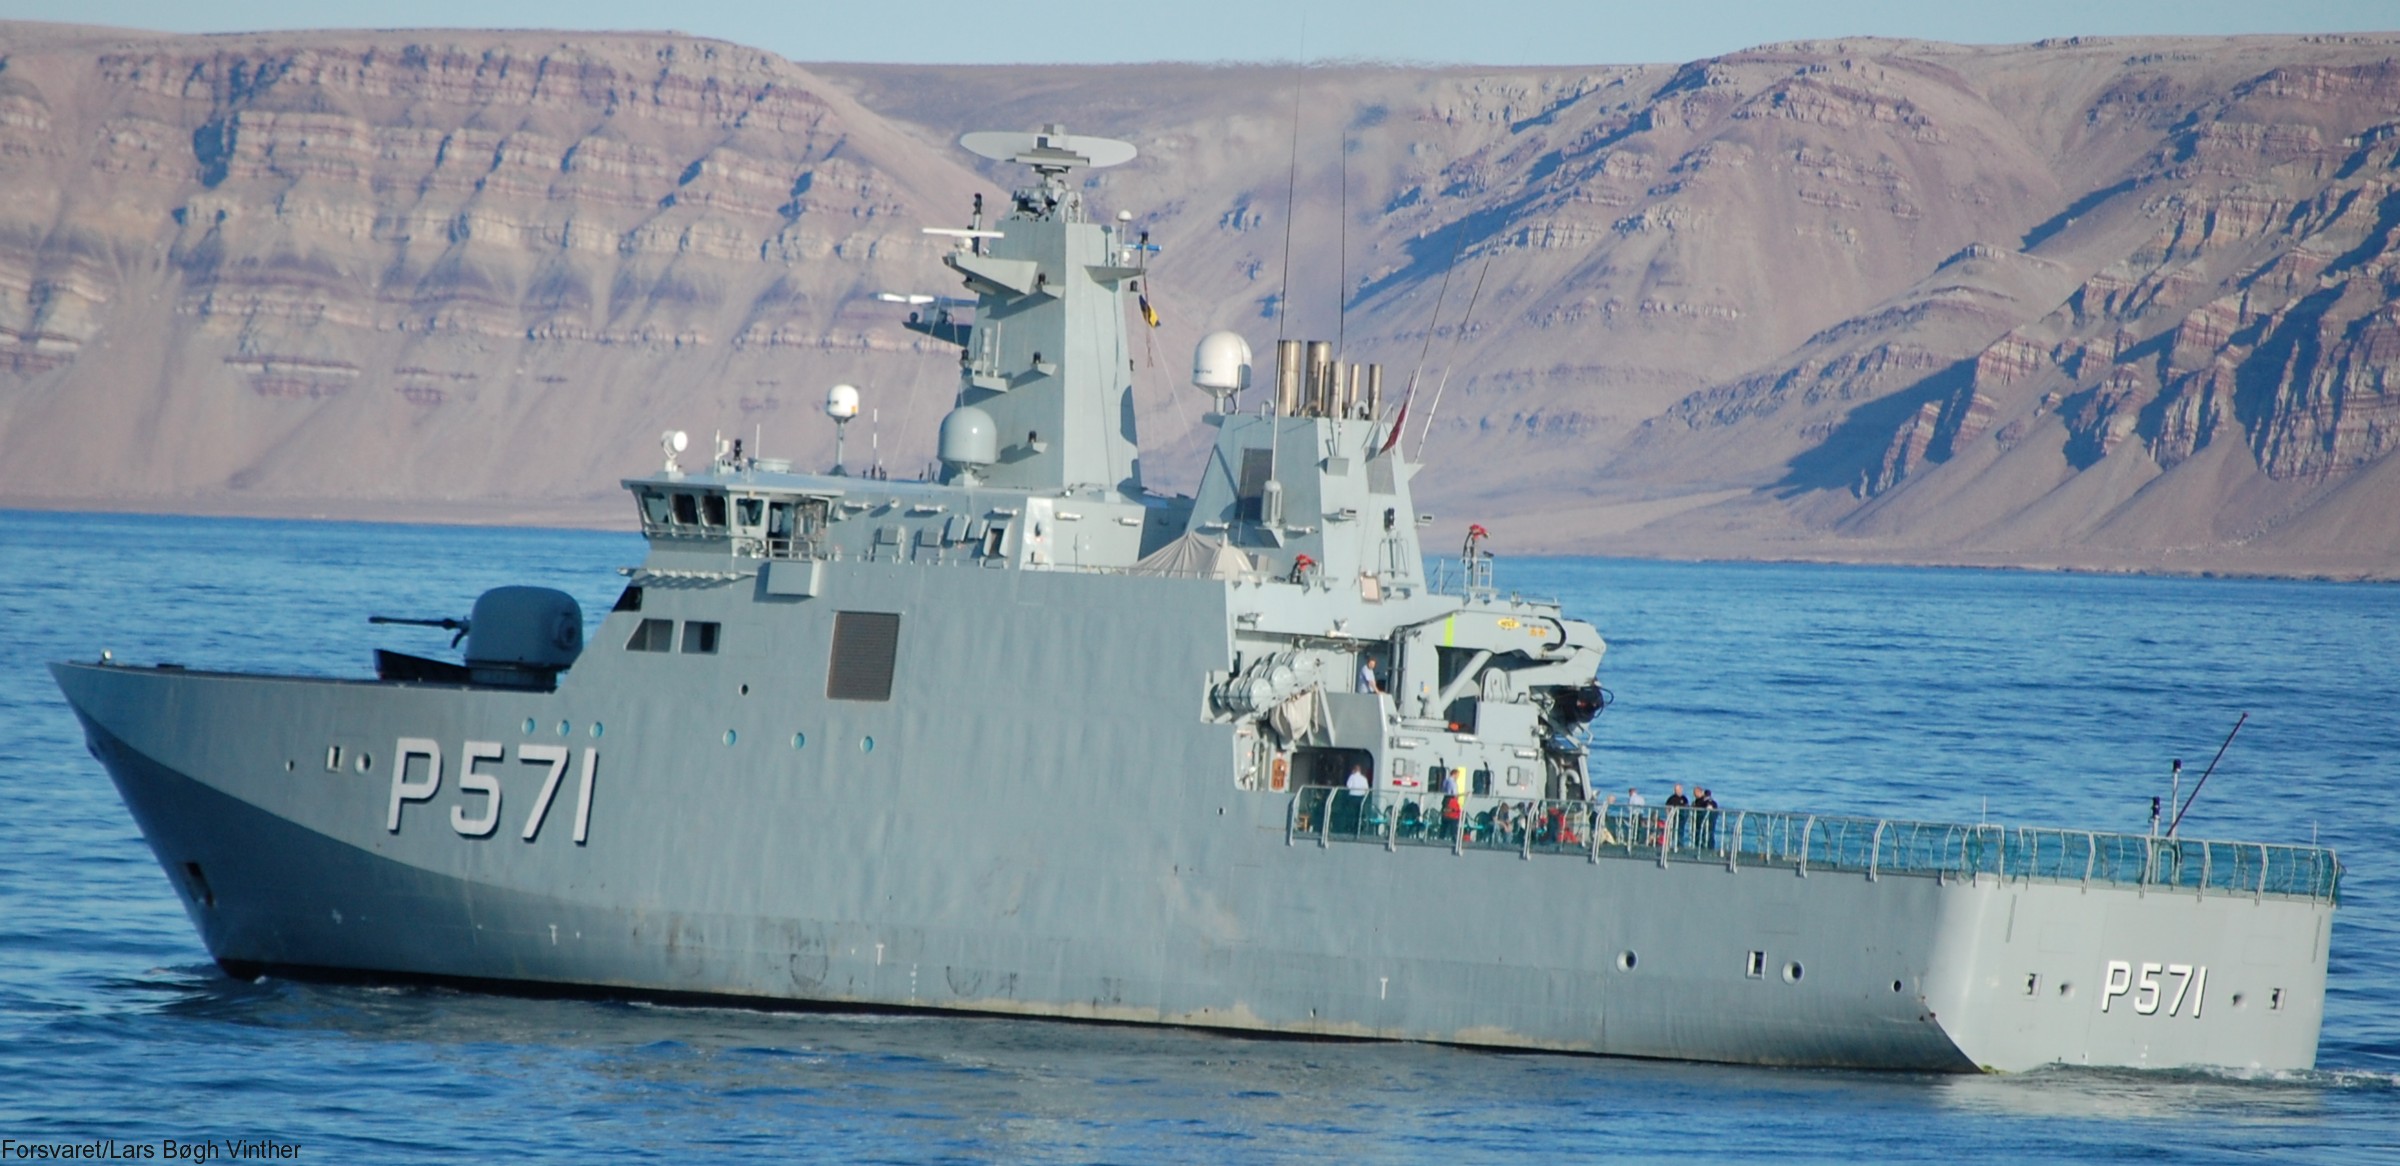 p-571 hdms ejnar mikkelsen knud rasmussen class offshore patrol vessel opv royal danish navy inspektionsfartøj 30